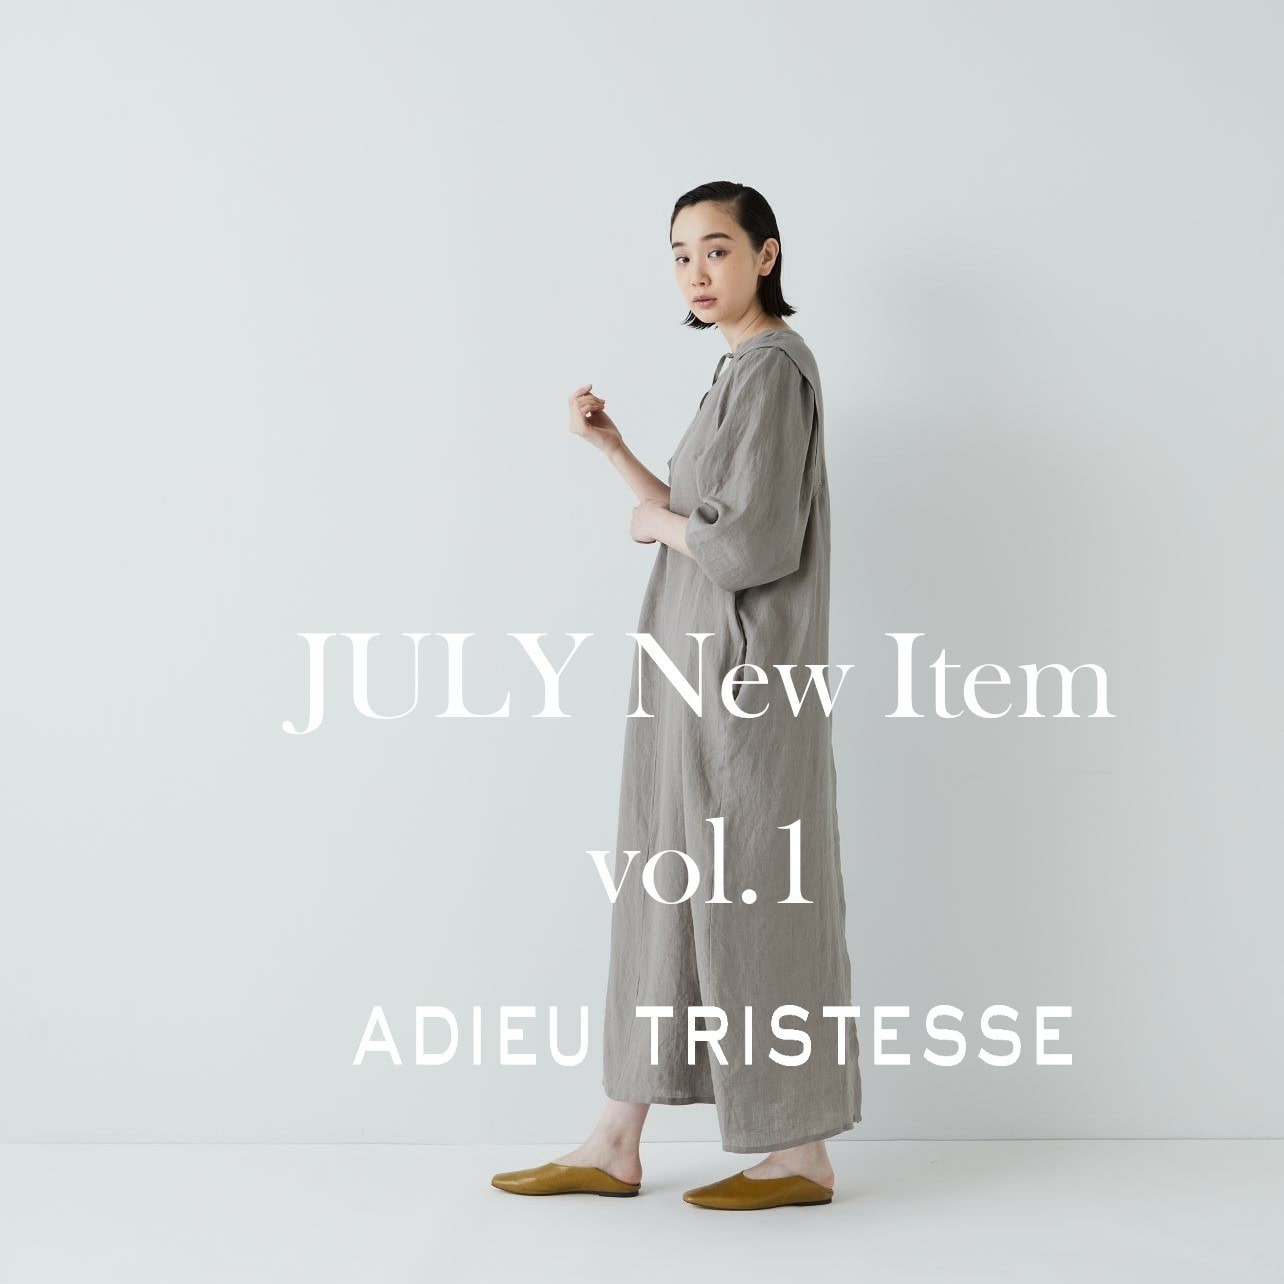 July New Item vol.2